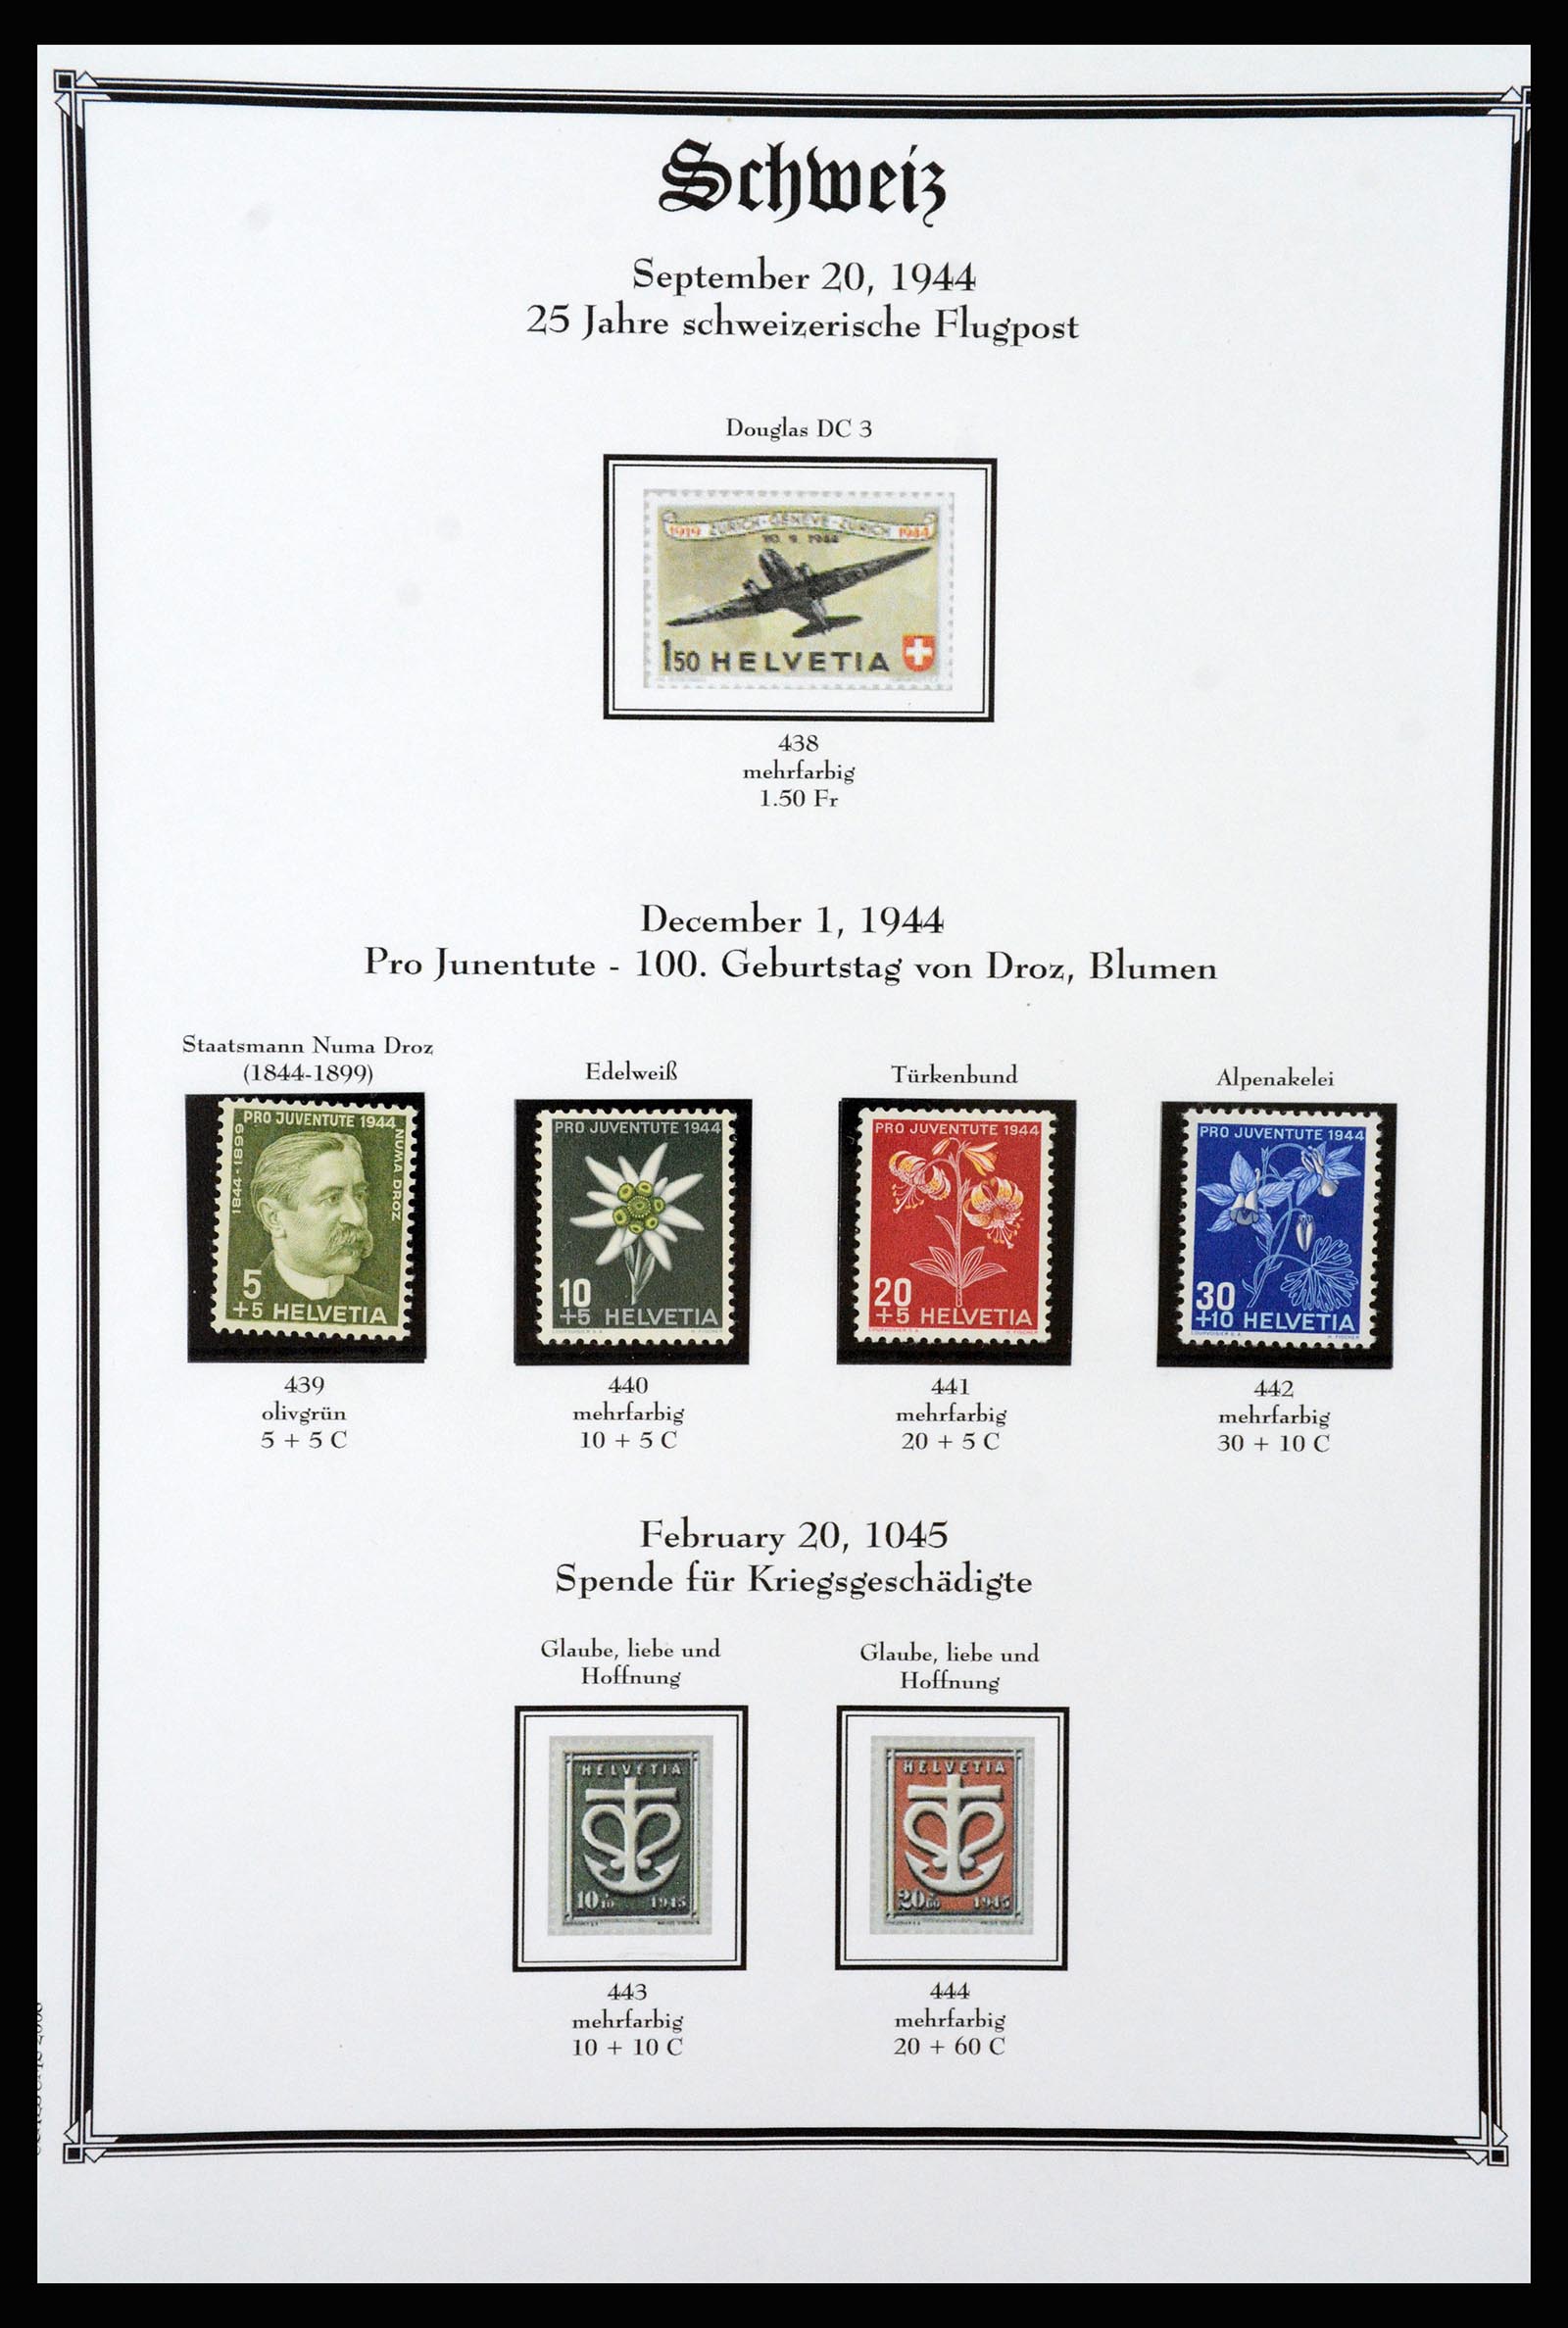 37159 081 - Stamp collection 37159 Switzerland 1862-2000.